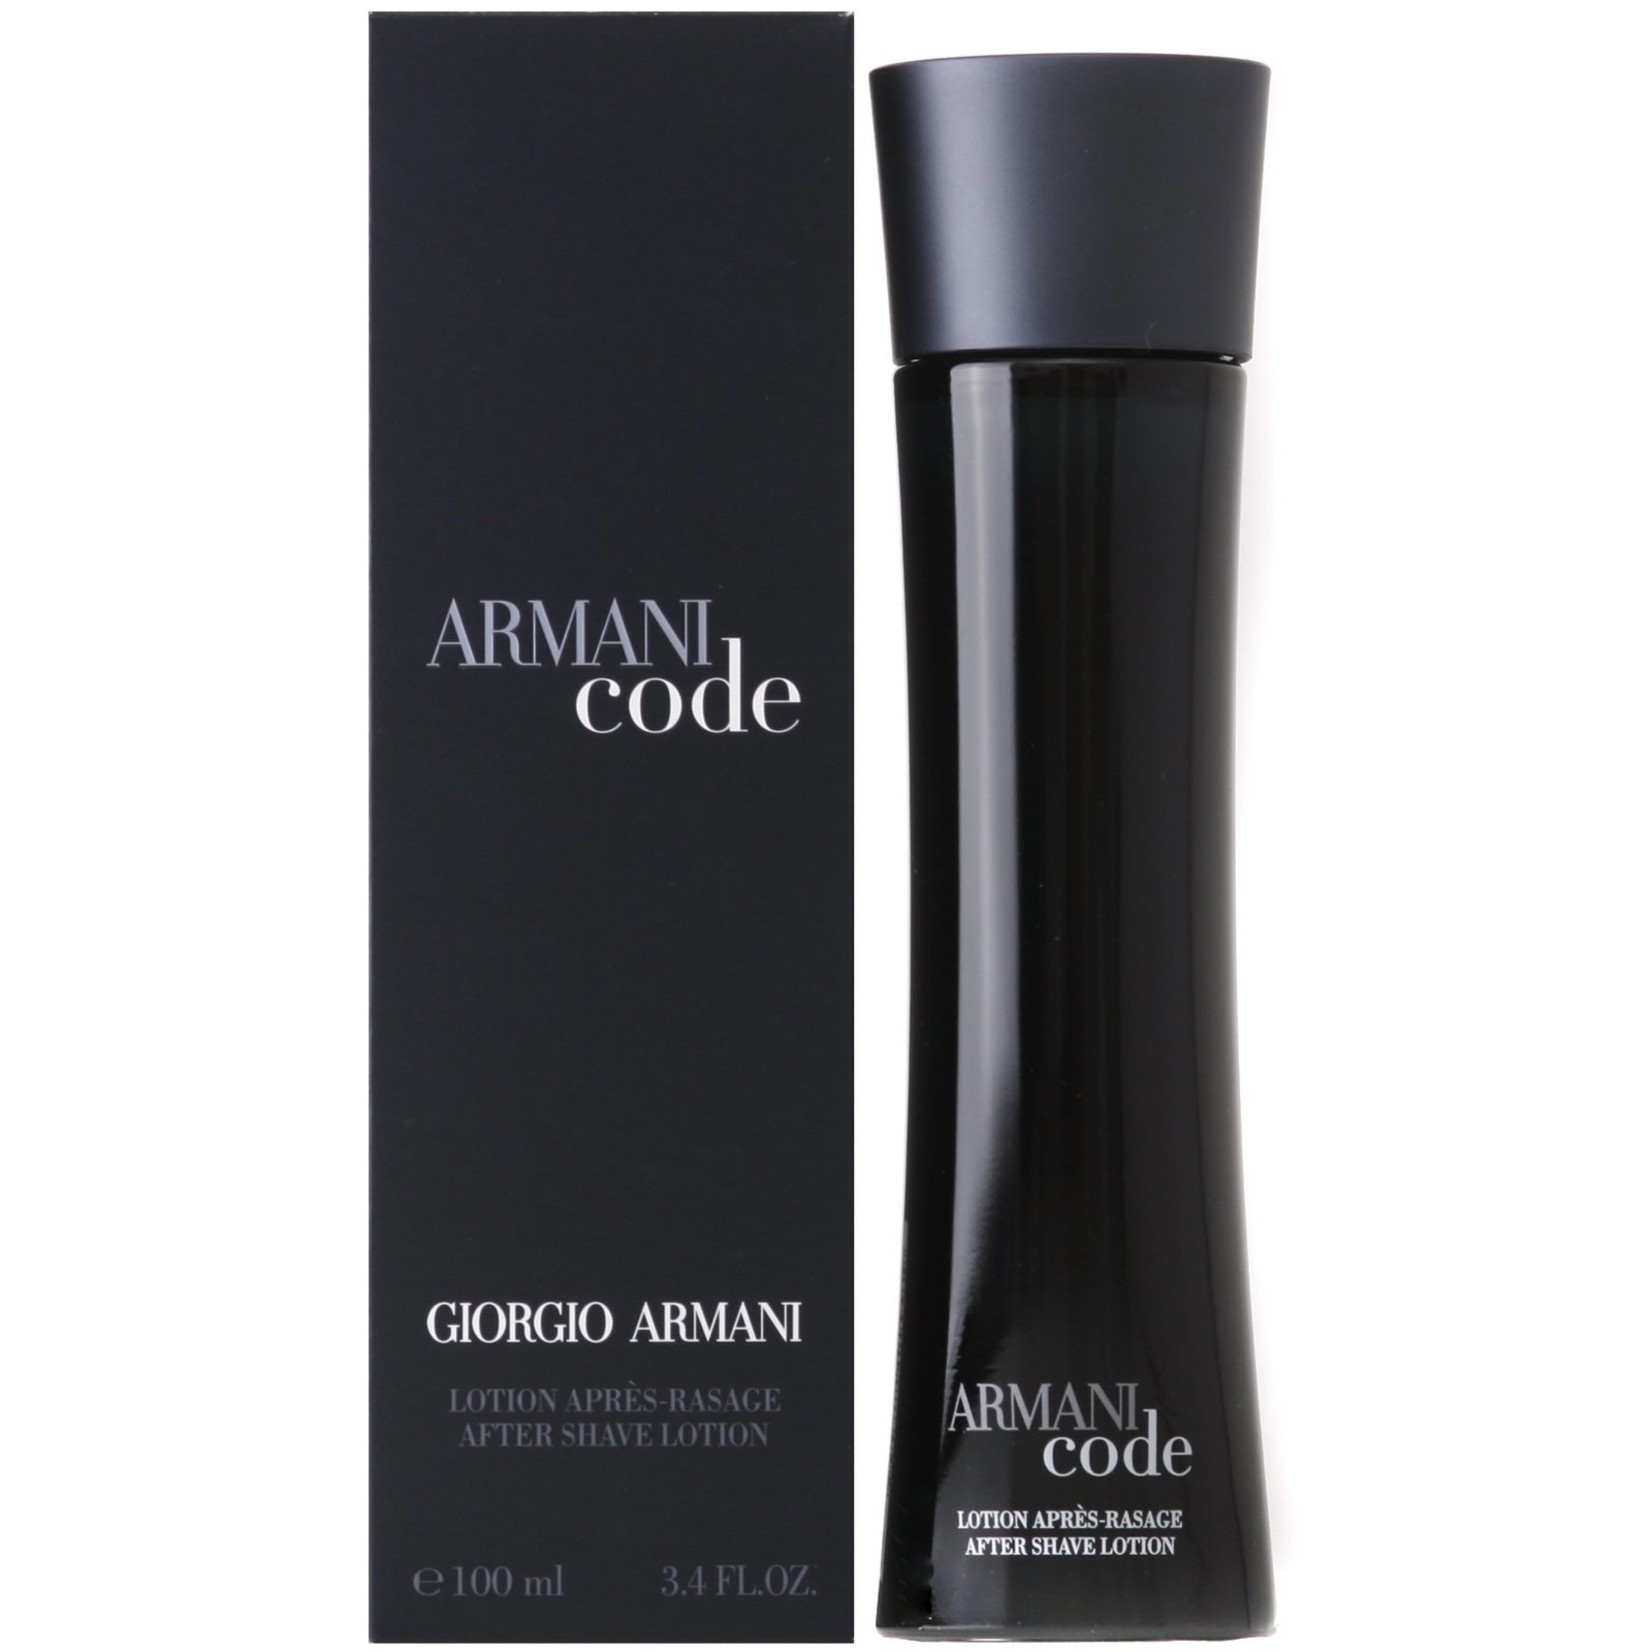 Giorgio Armani Armani Code After Shave Lotion